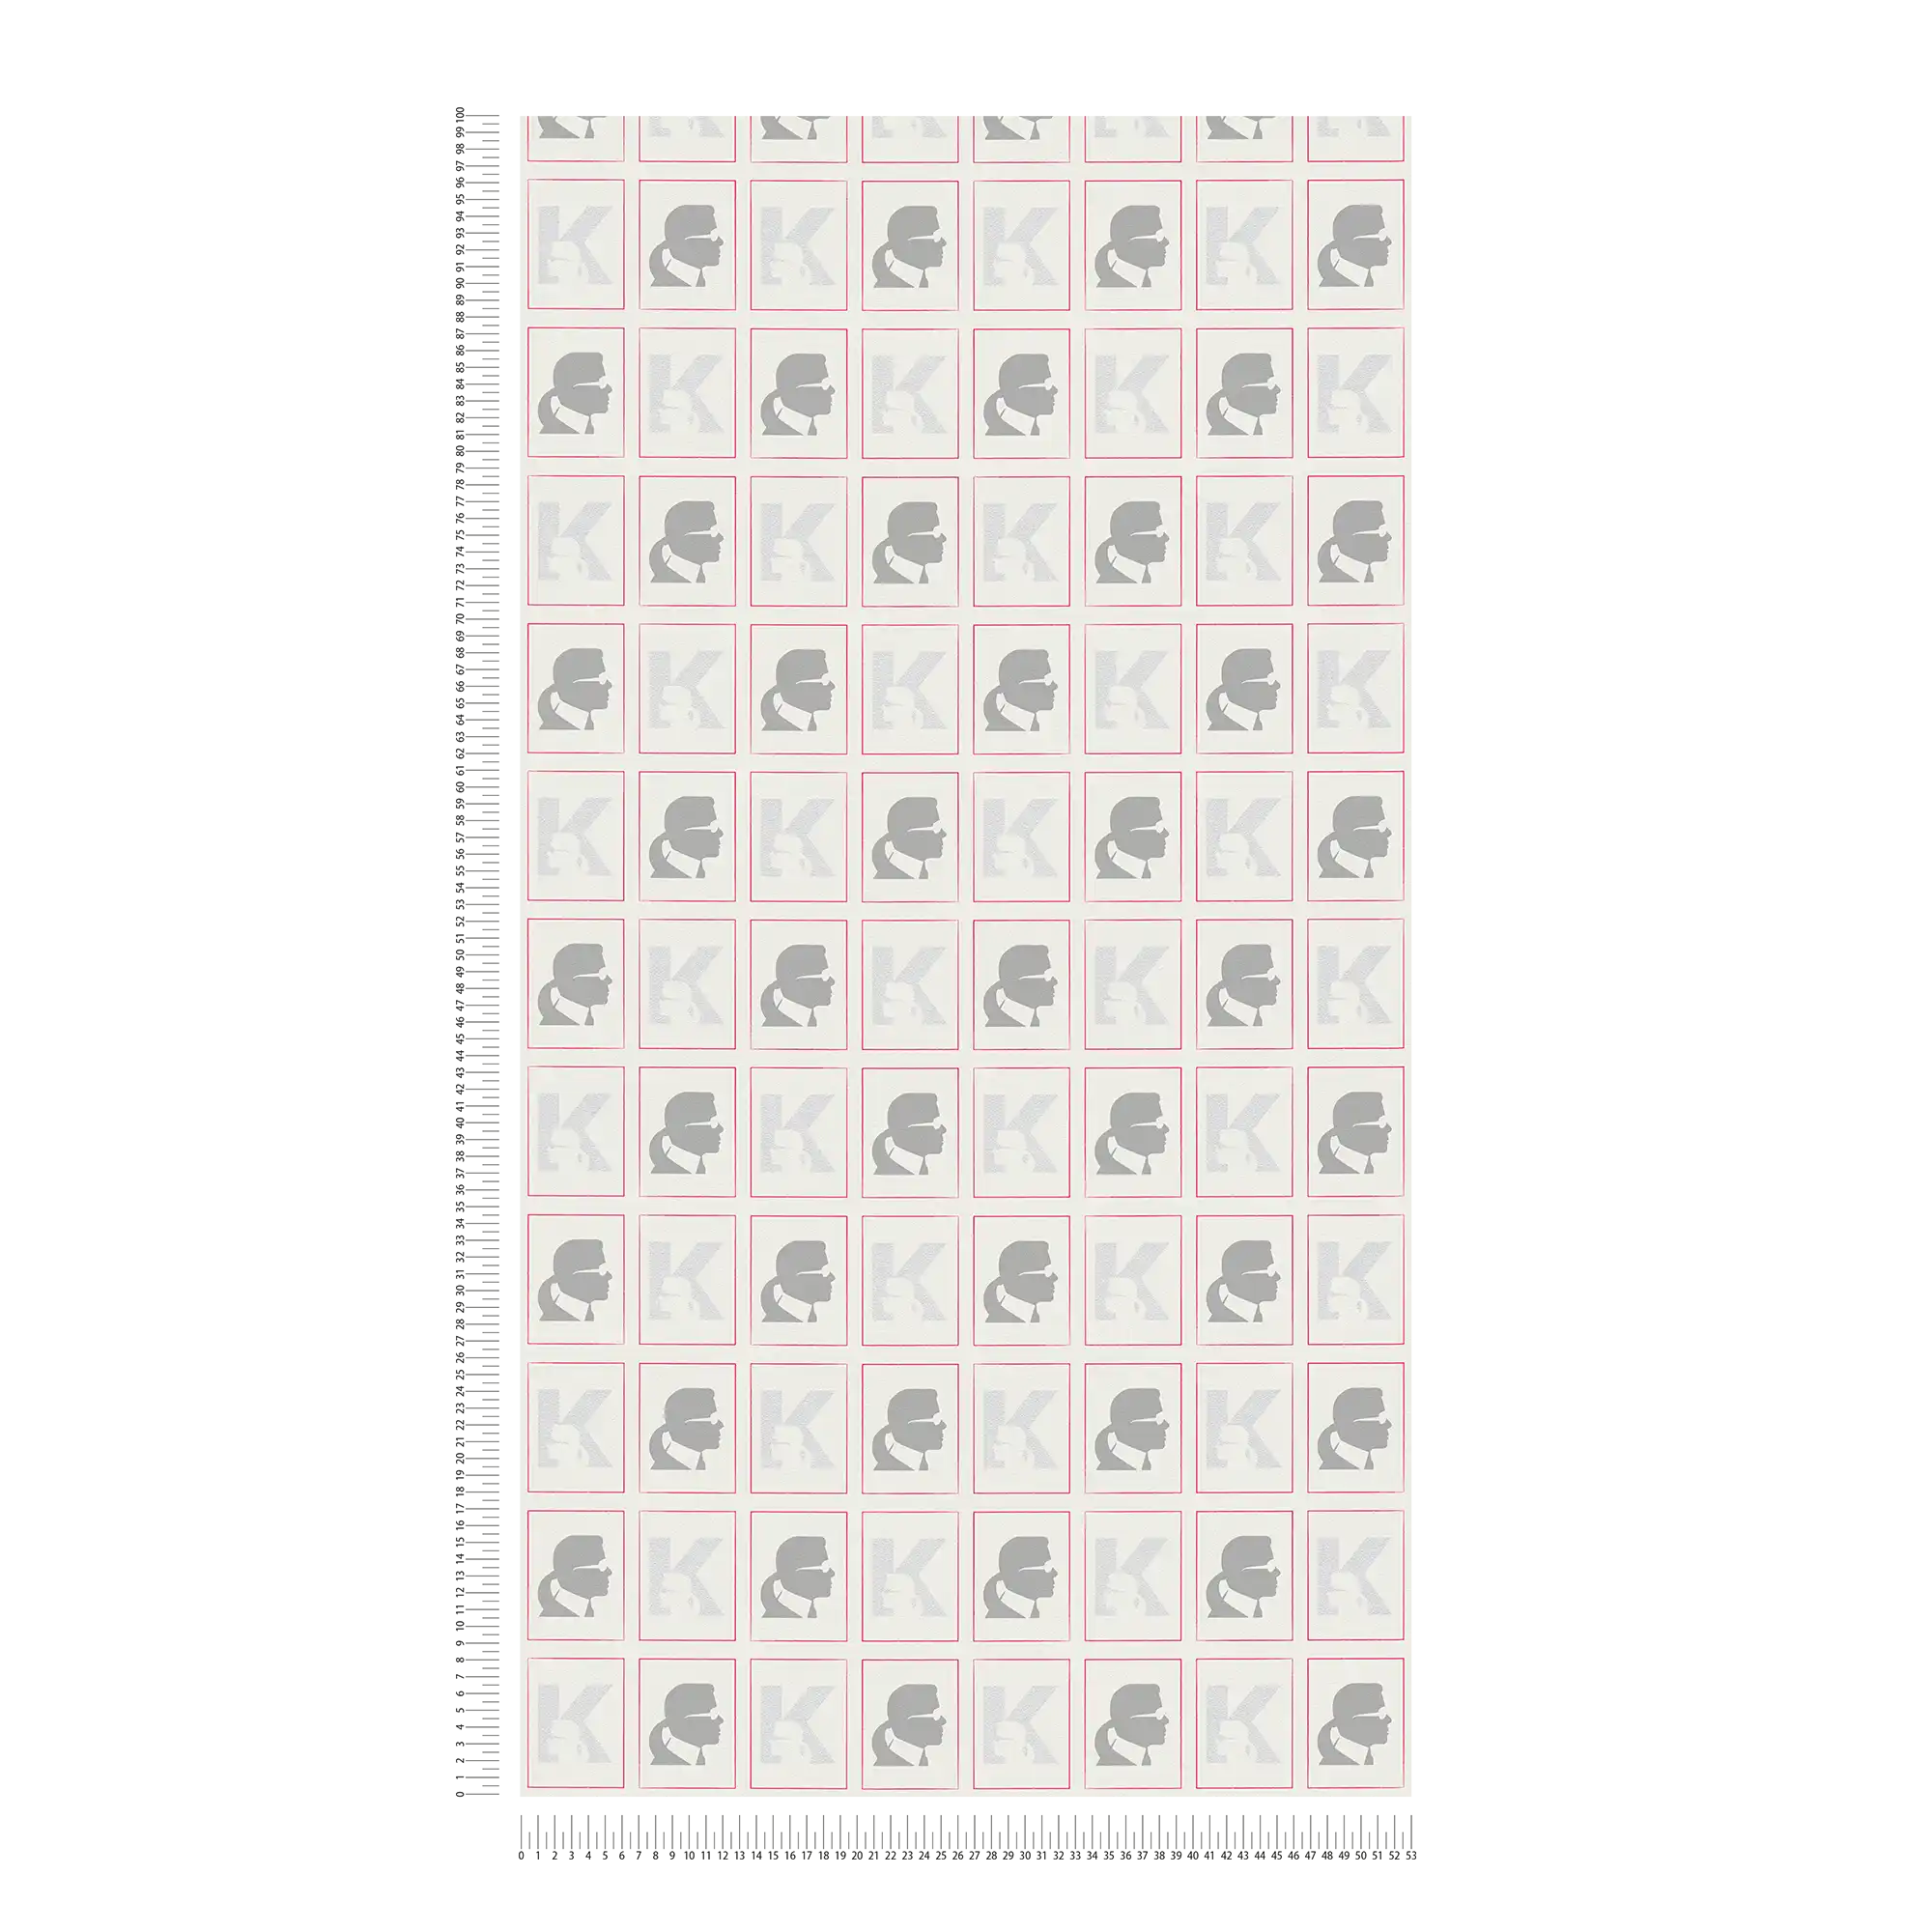             Non-woven wallpaper Karl LAGERFELD with profile pattern - grey, white
        